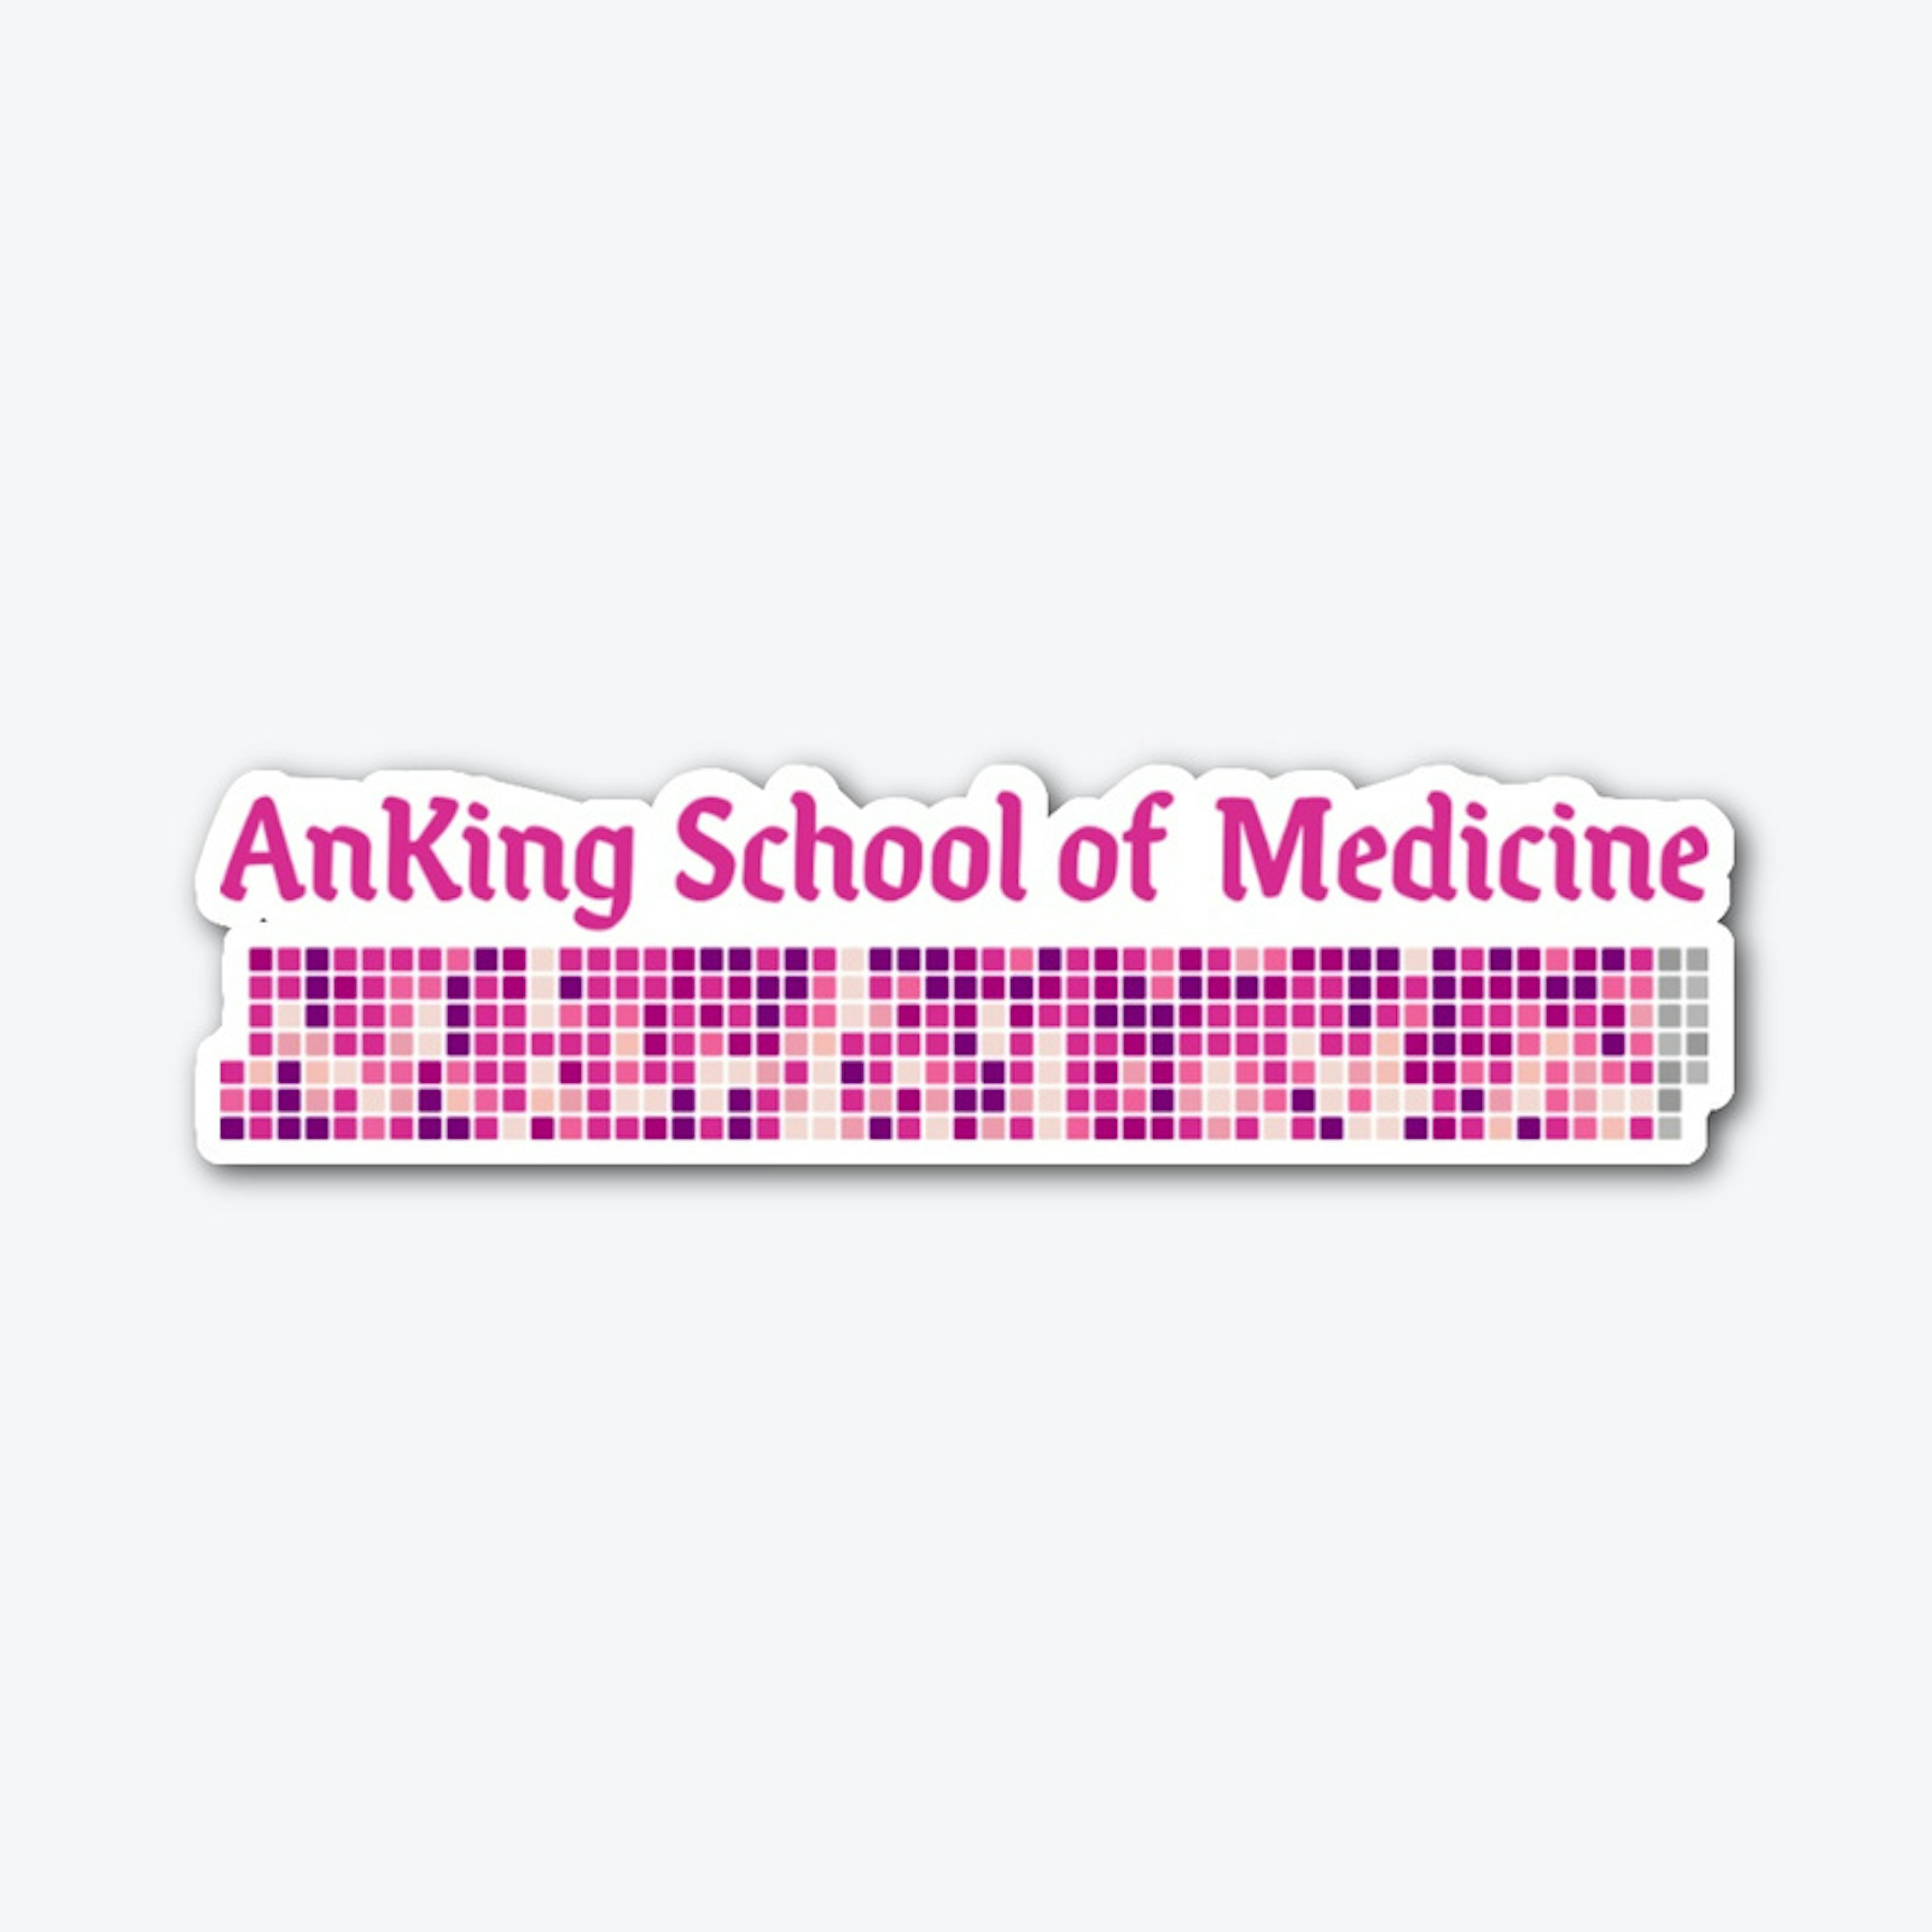 AnKing School of Medicine - Magenta